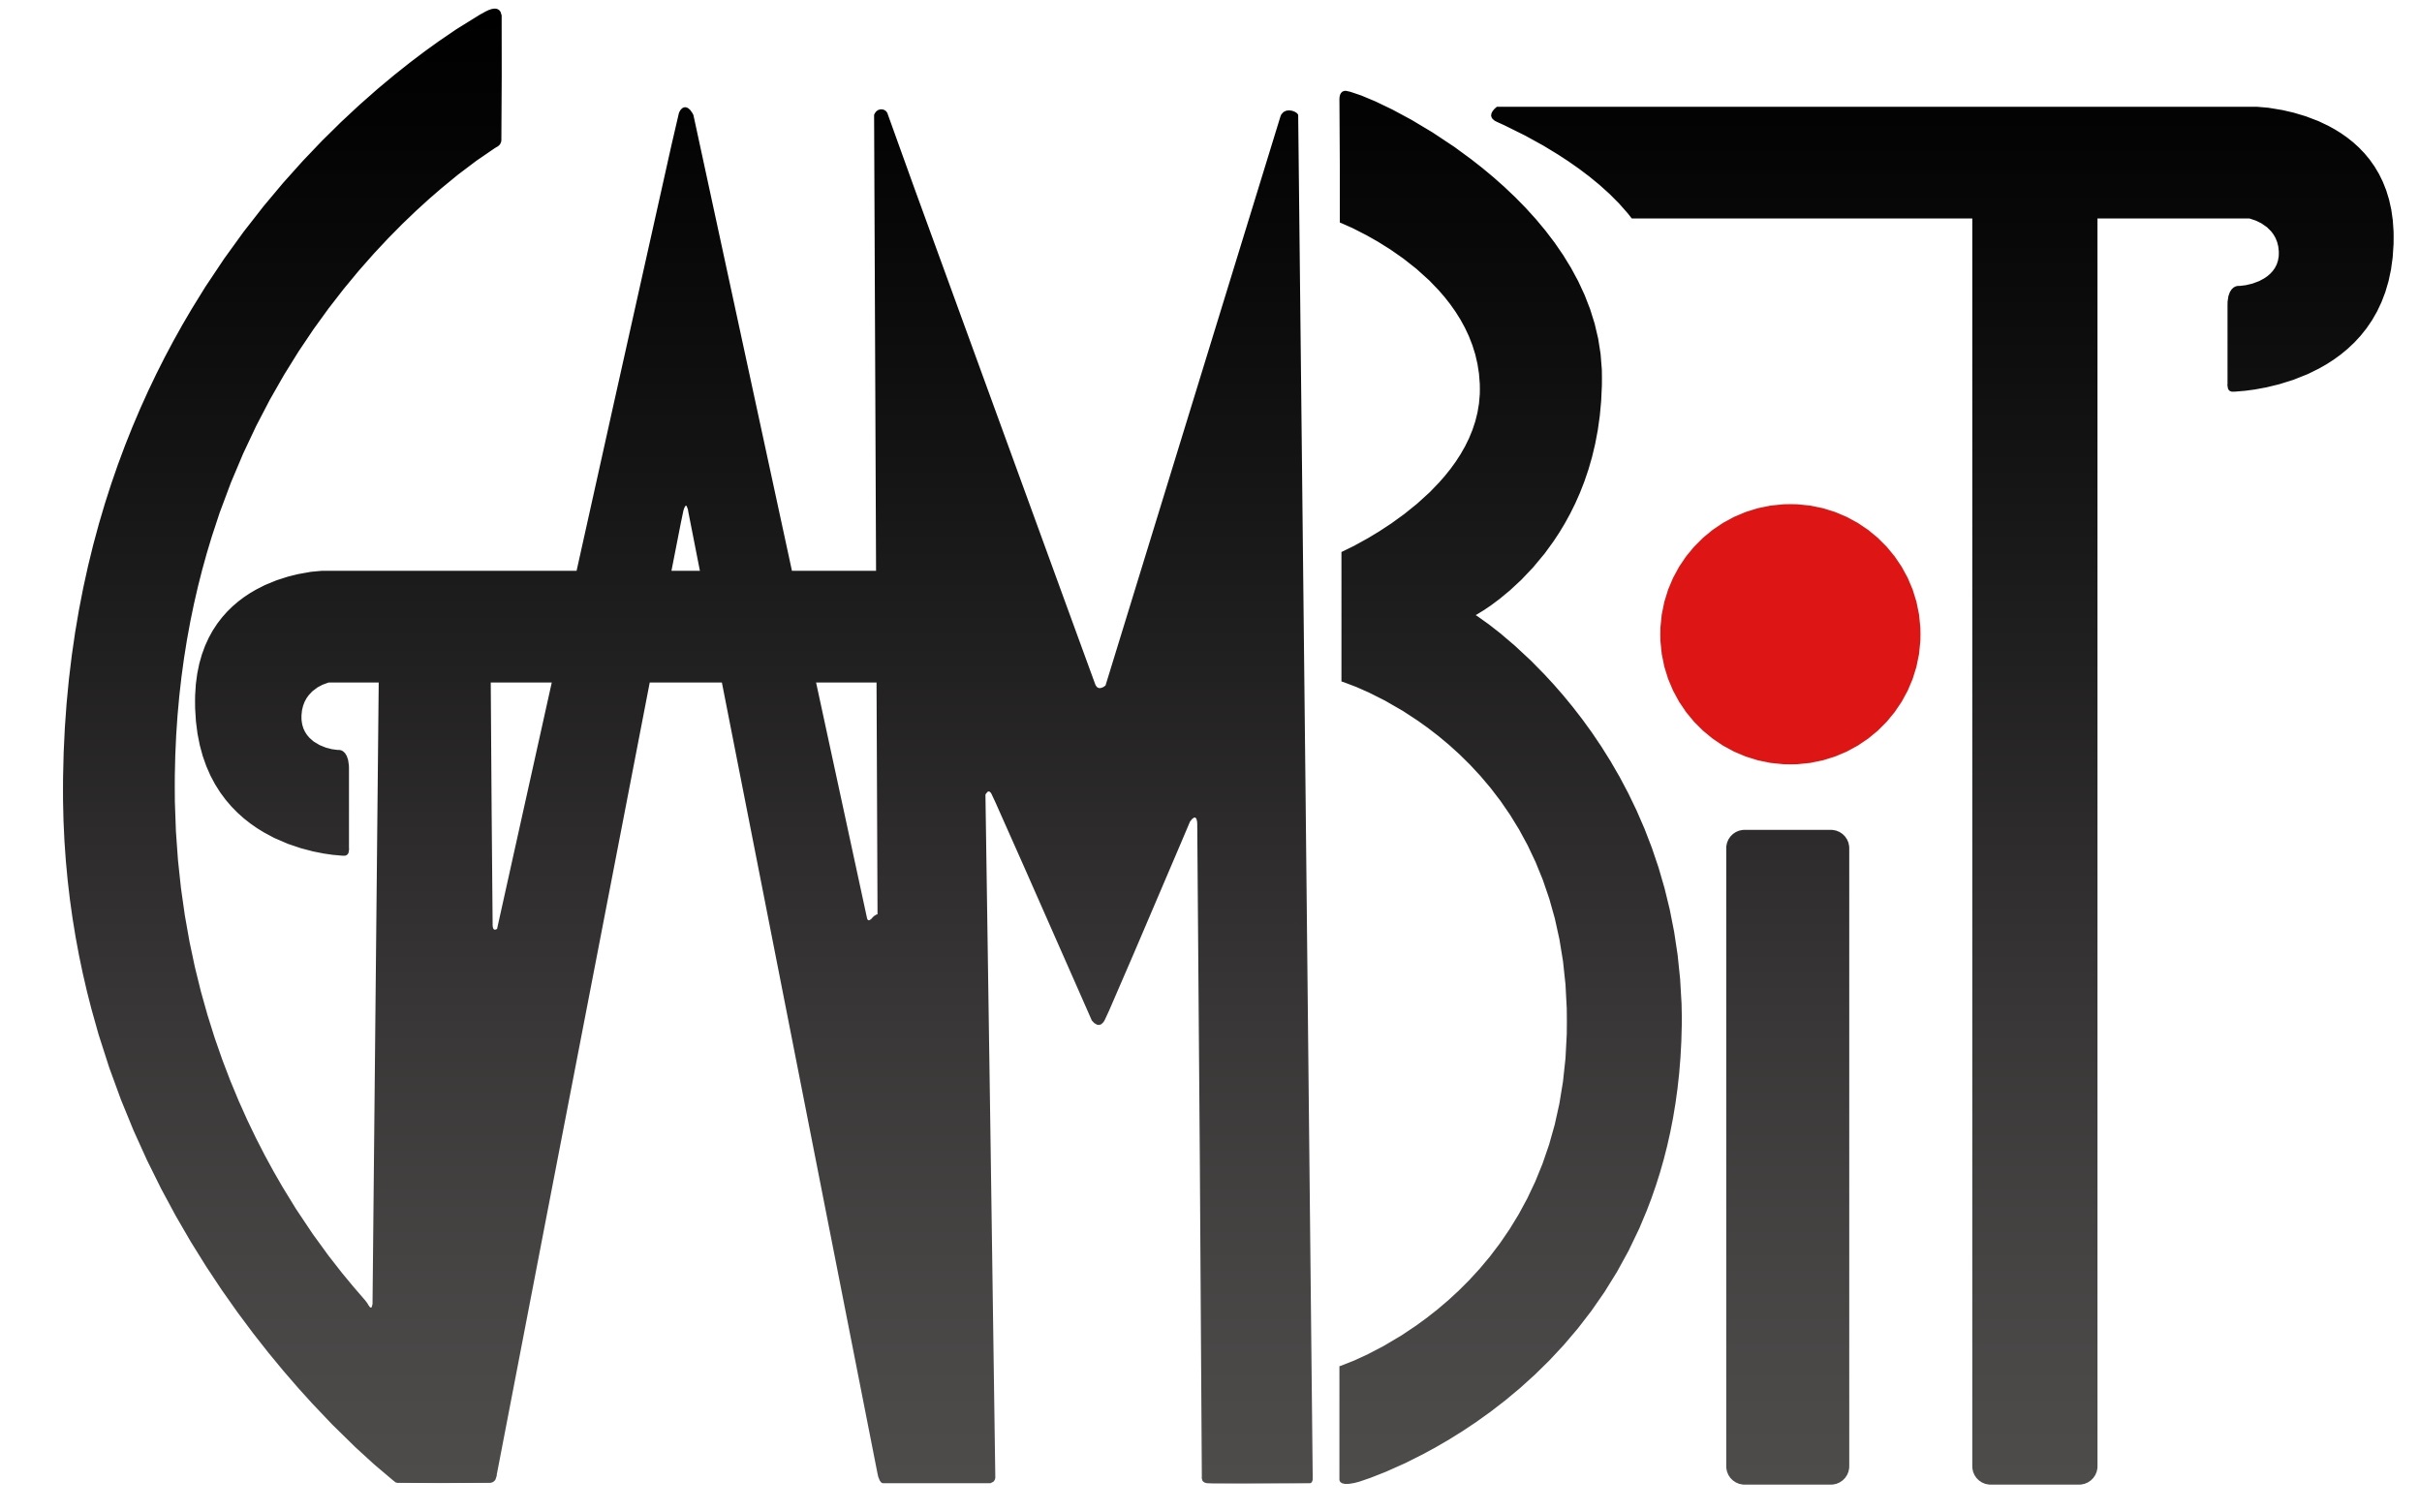 GAMBIT Logo.jpg d0165b6ebc212397d5571458581ab773